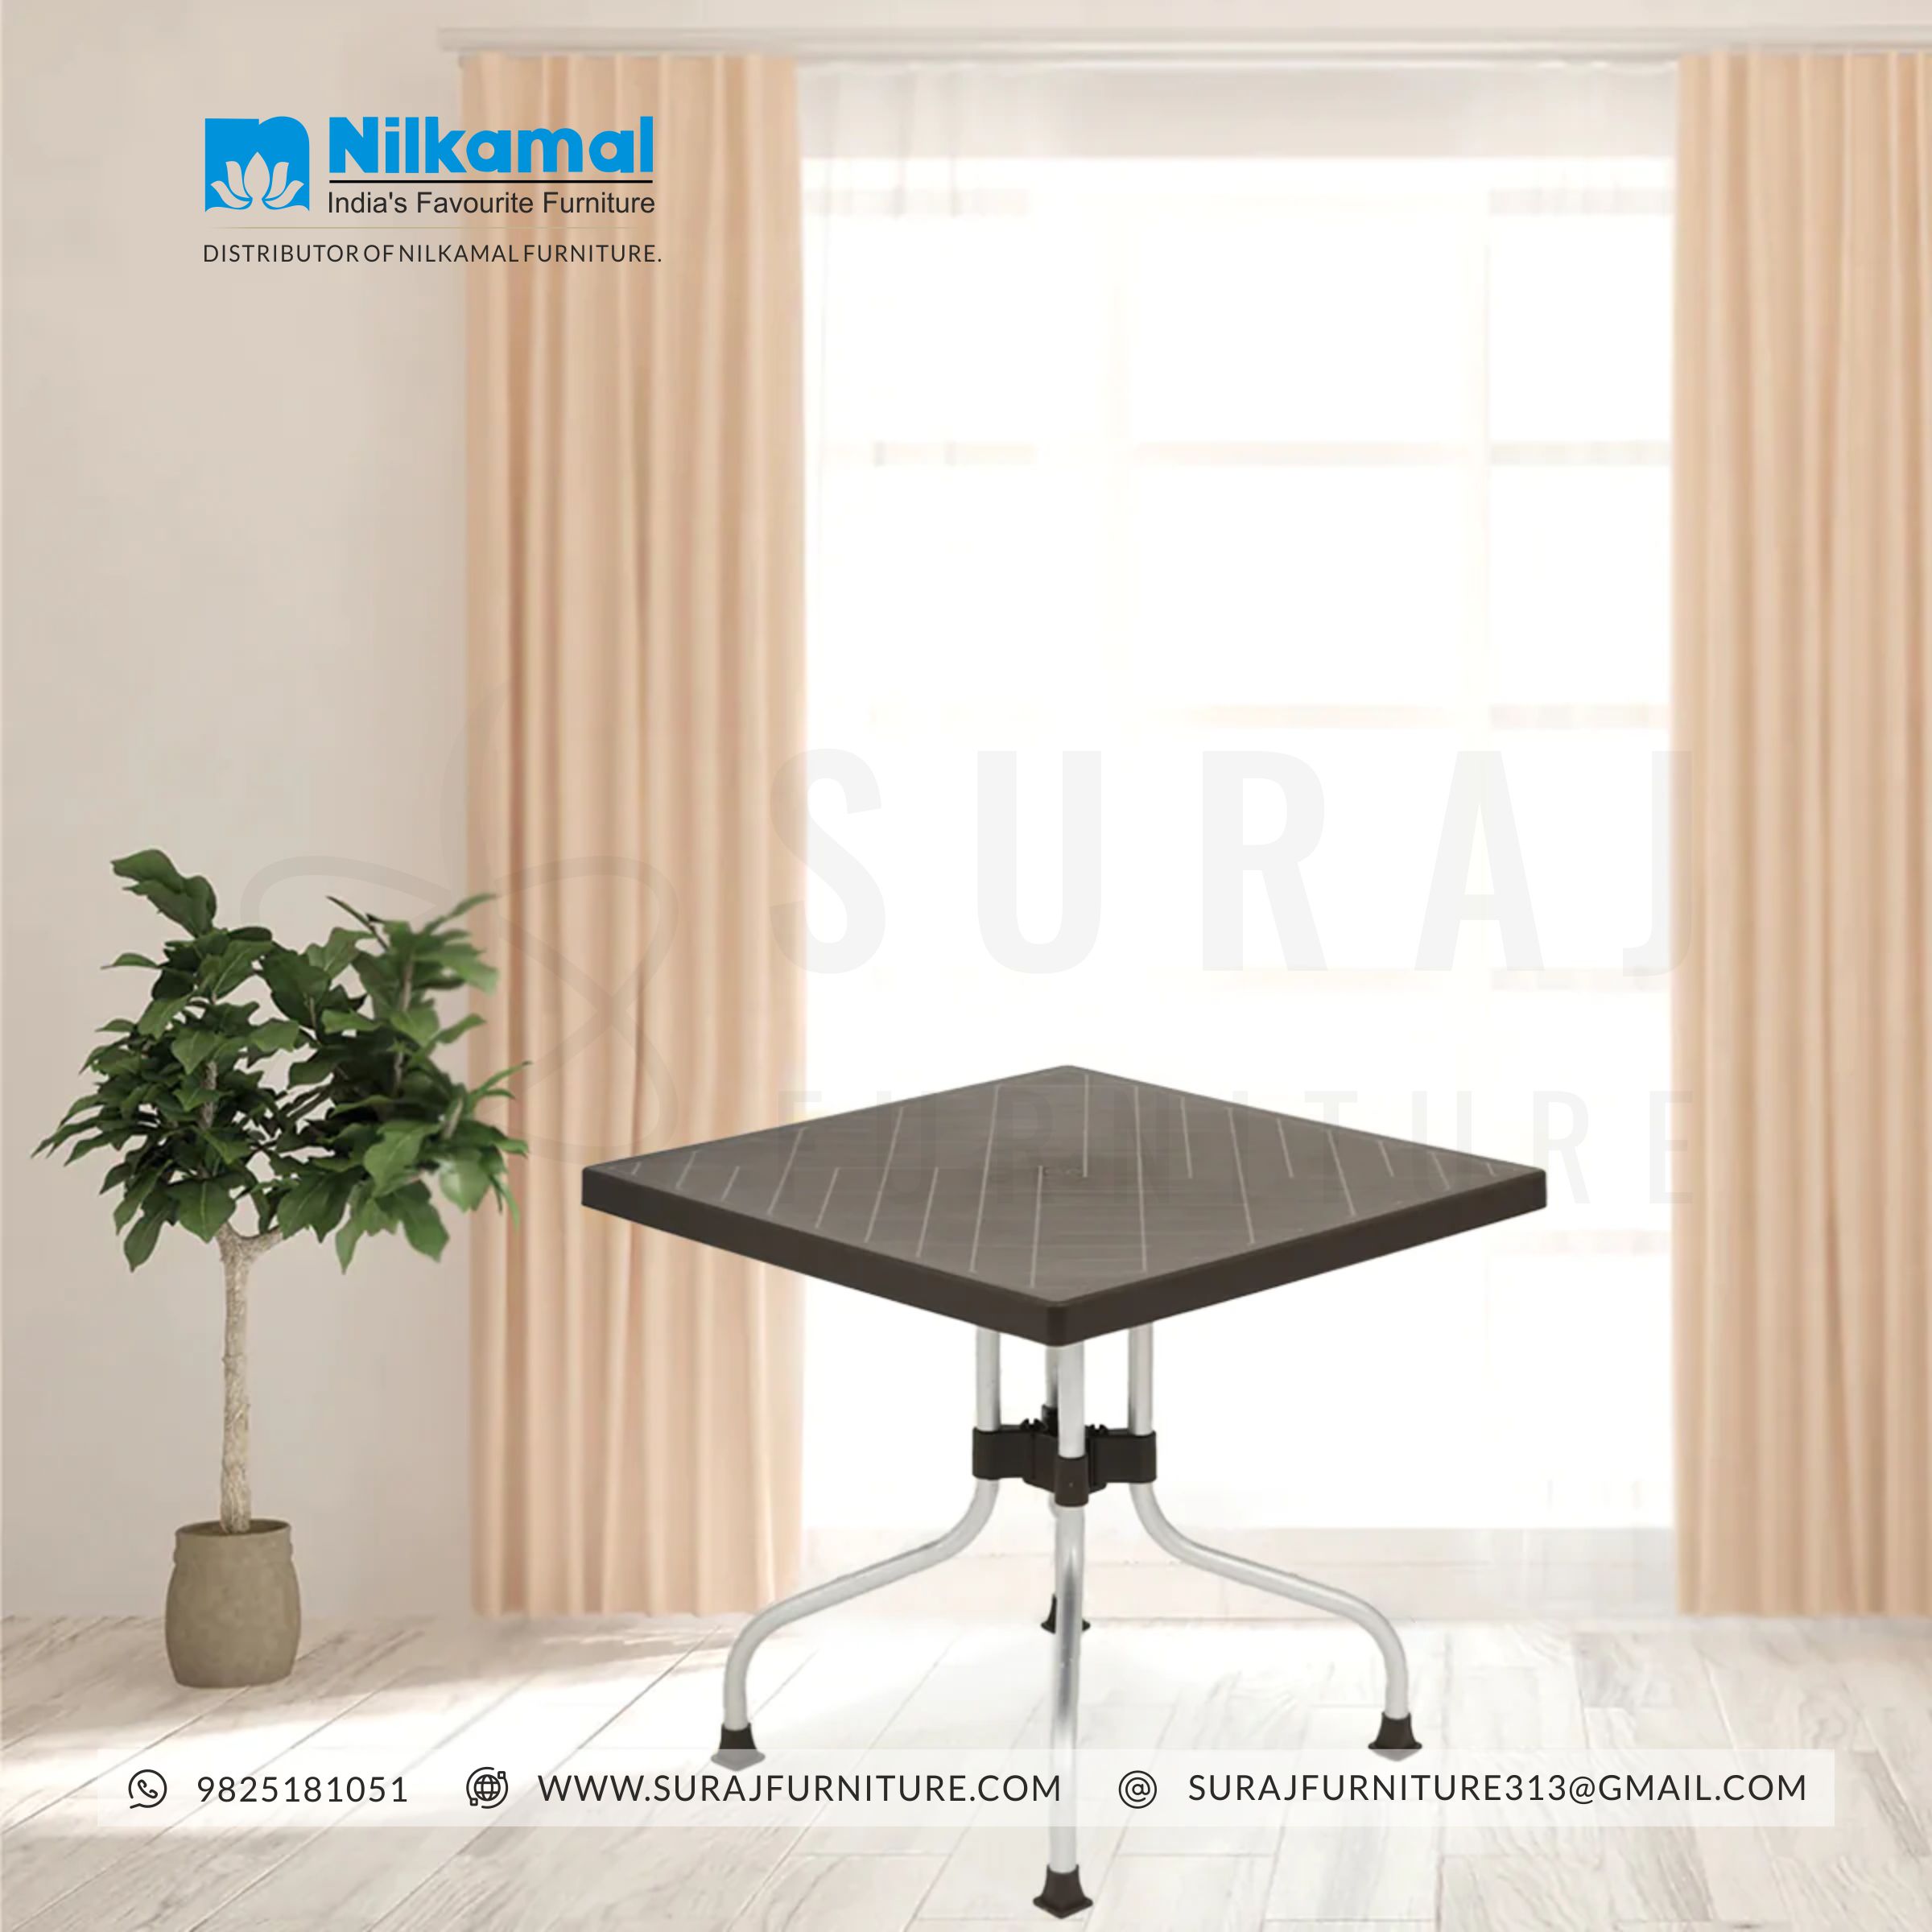 Nilkmal Standing Dining Table brown folding